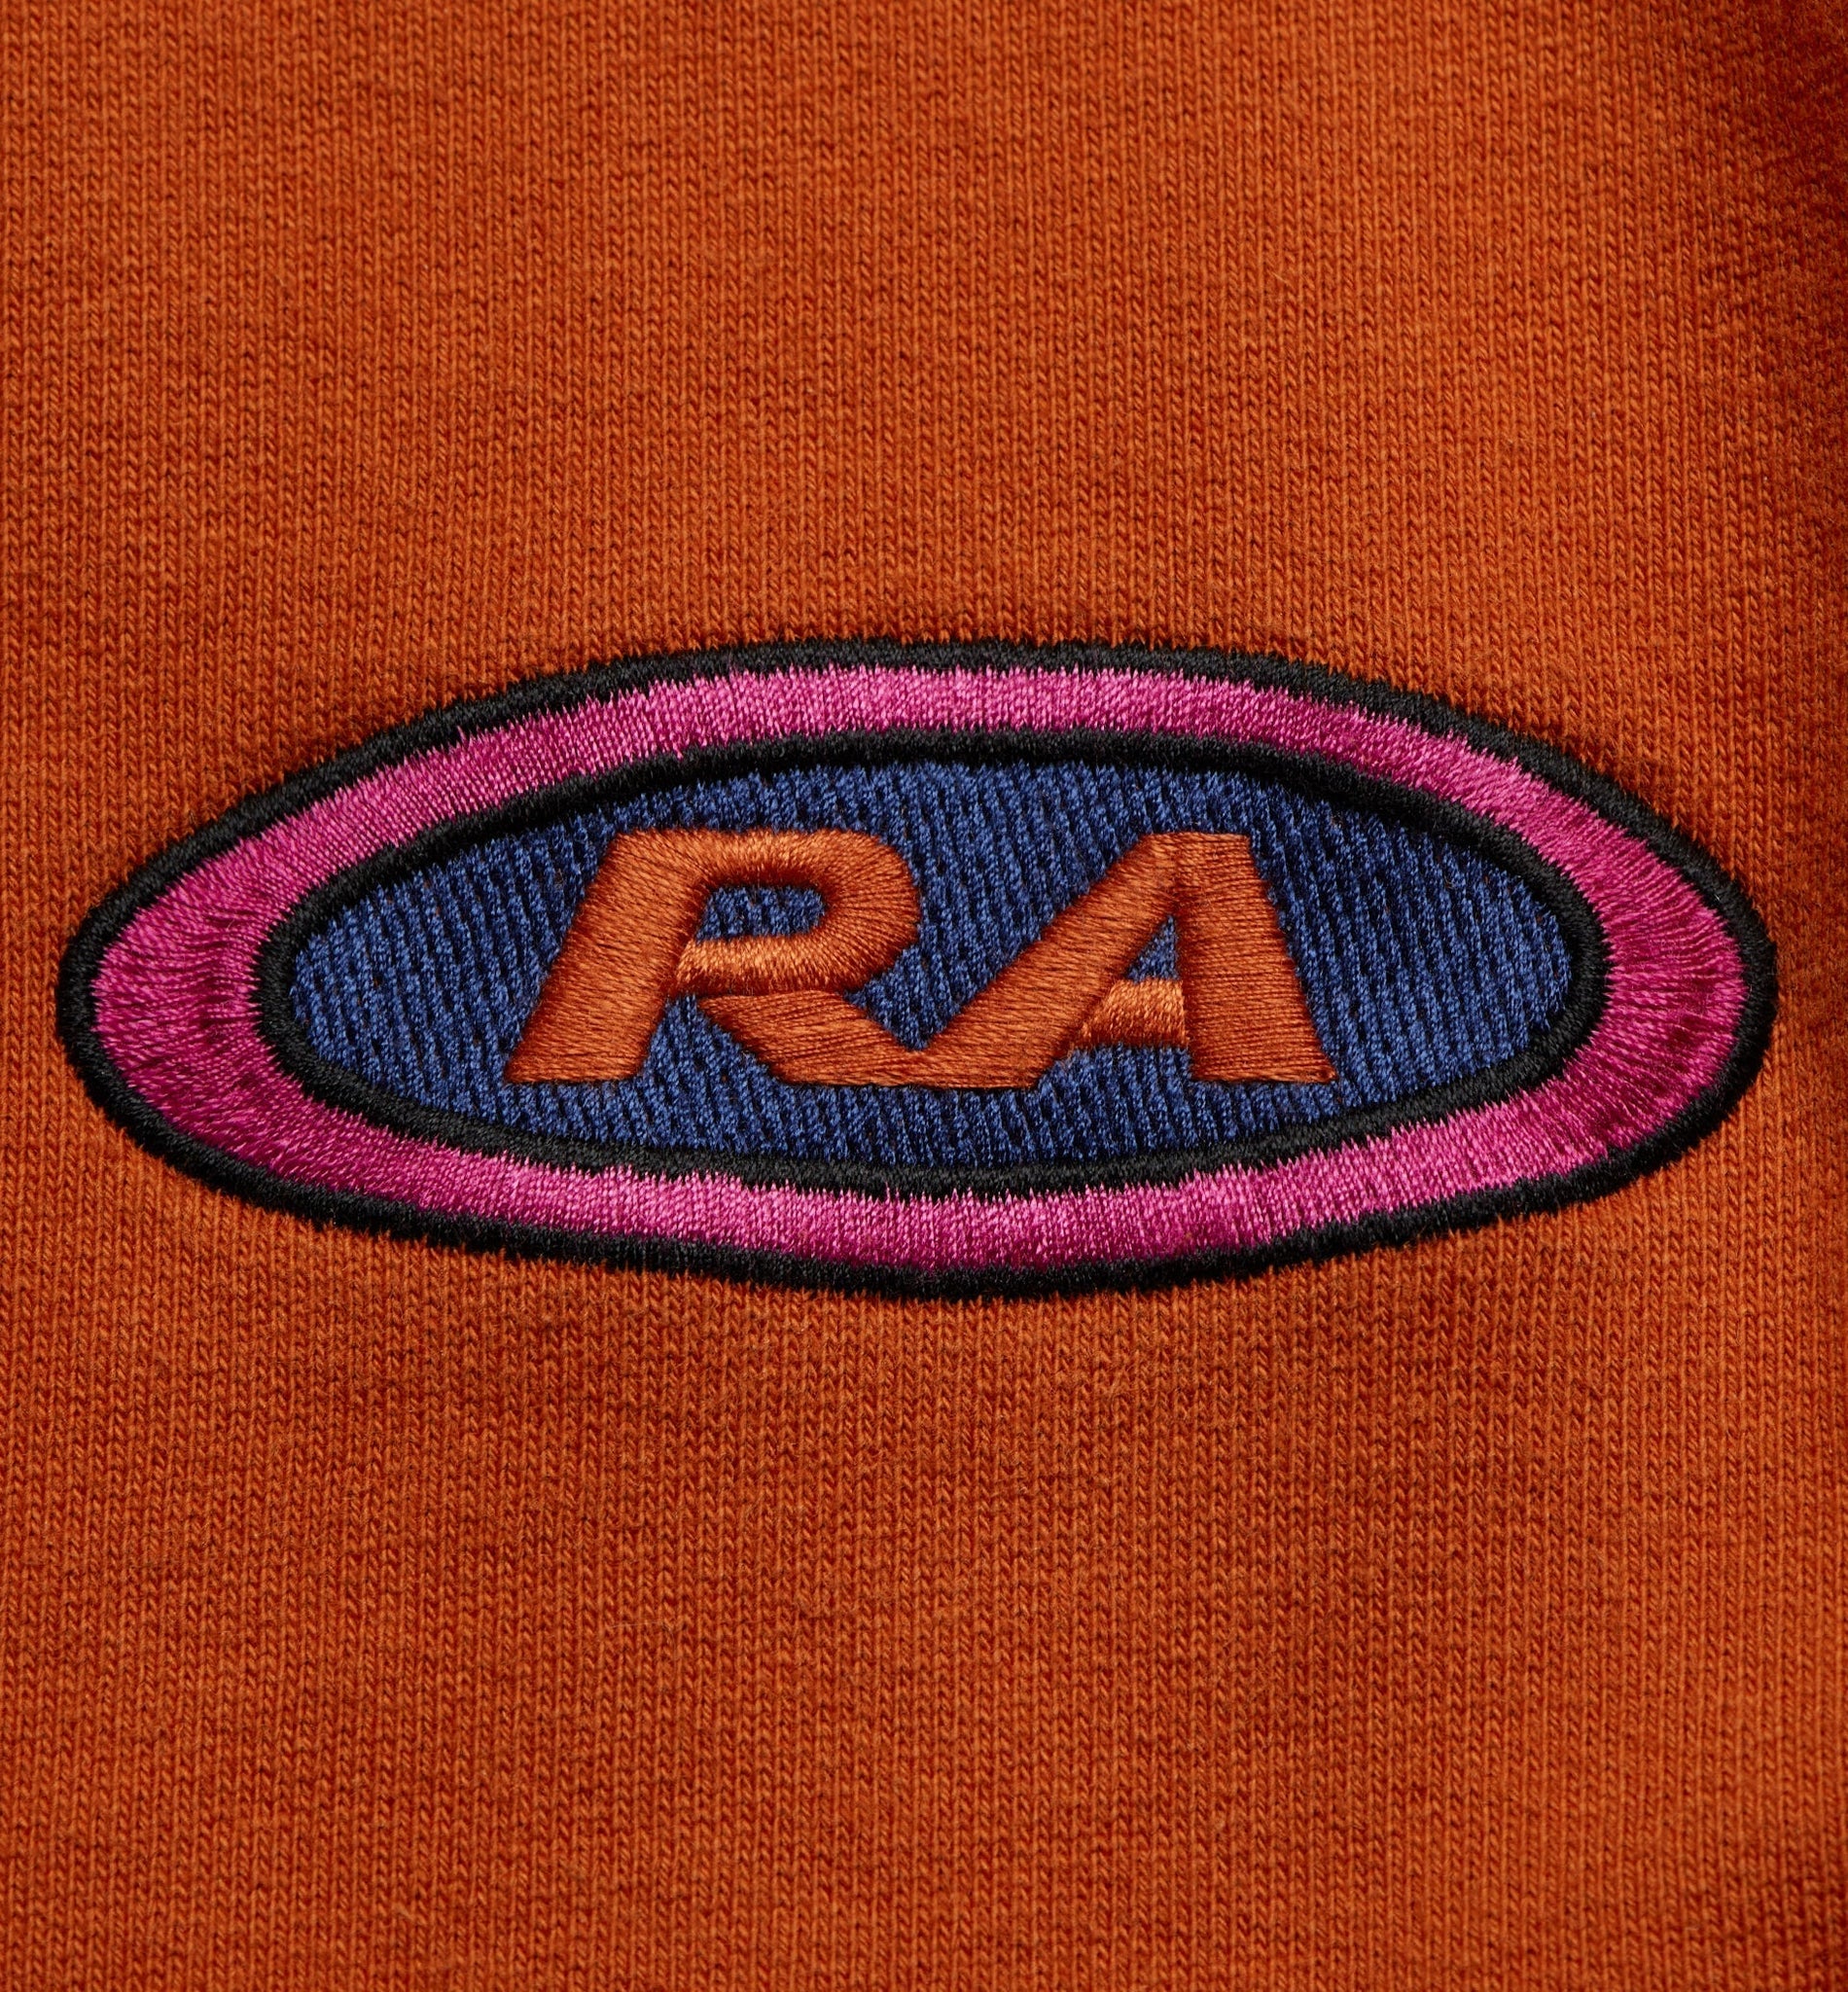 Early Grab Crew Neck Sweatshirt - Sienna Orange